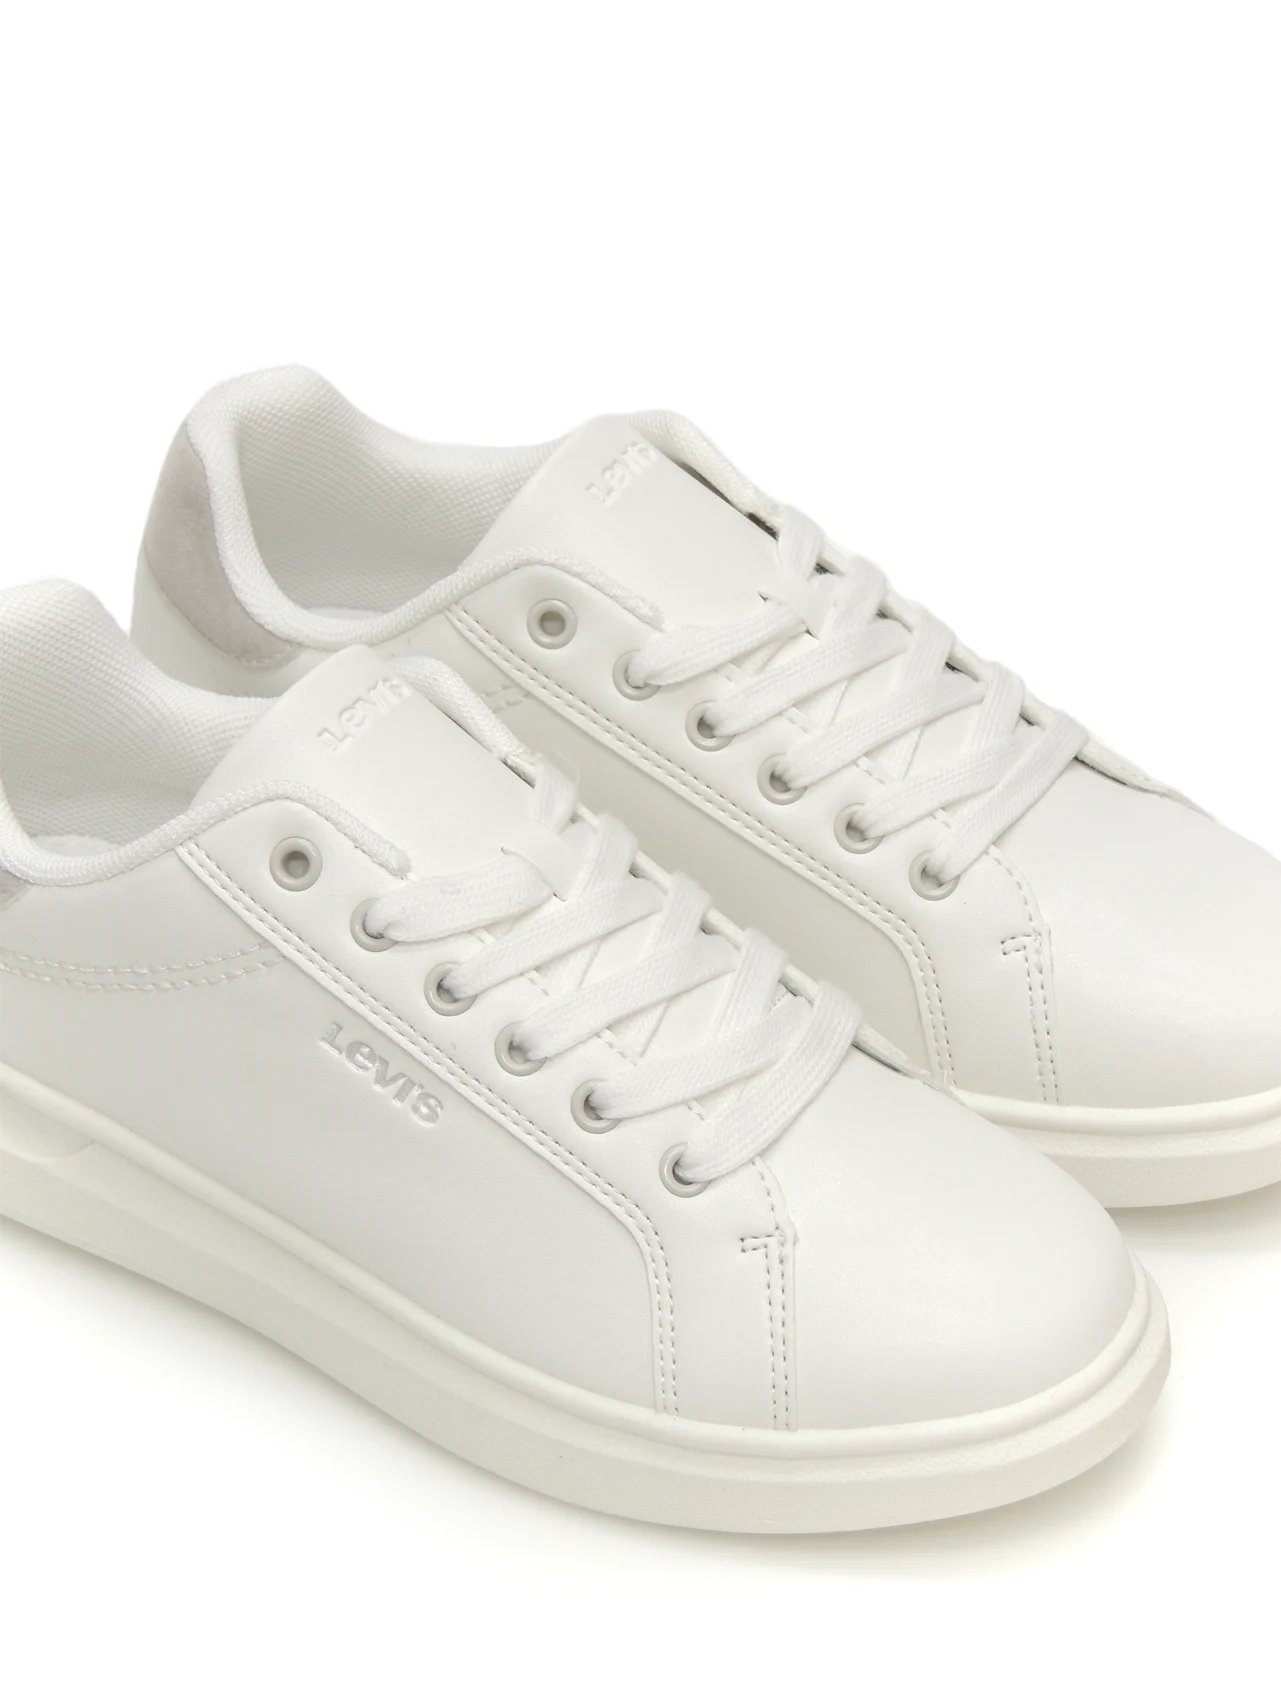 sneakers--levis-233415-polipiel-blanco